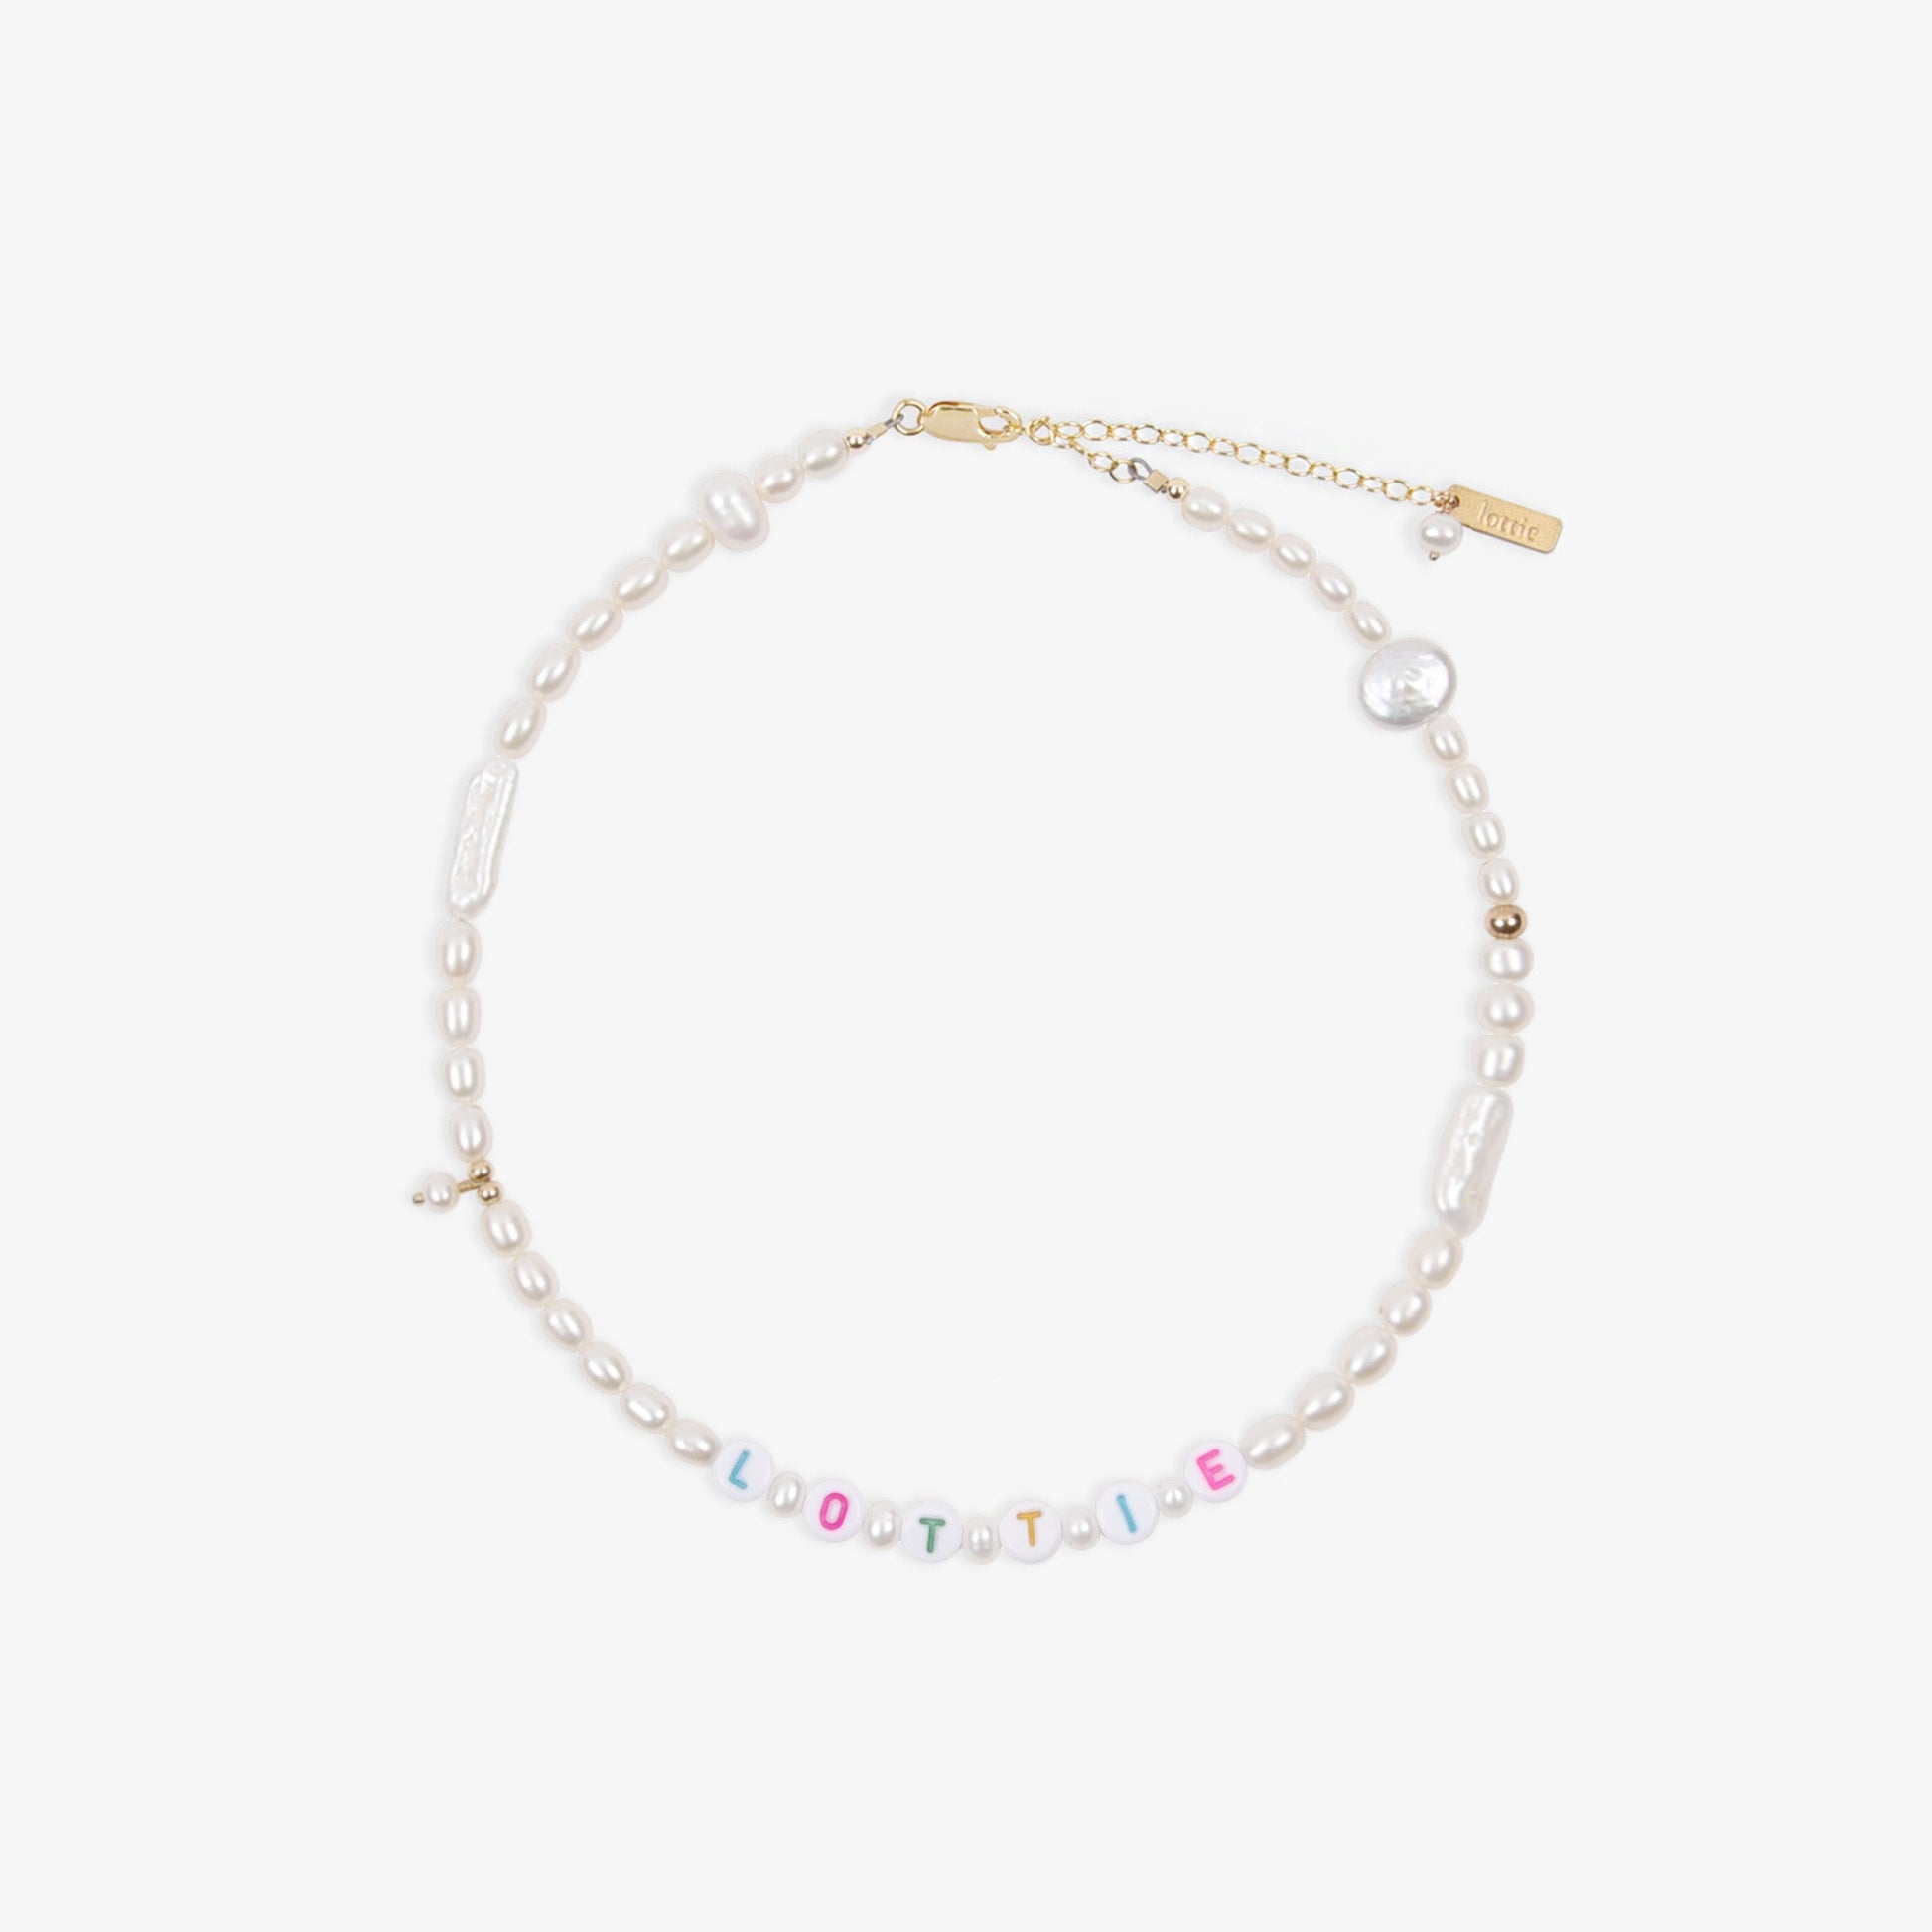 customizable pearl necklace, gigi hadid necklace, harper's bazaar necklace, gigi necklace